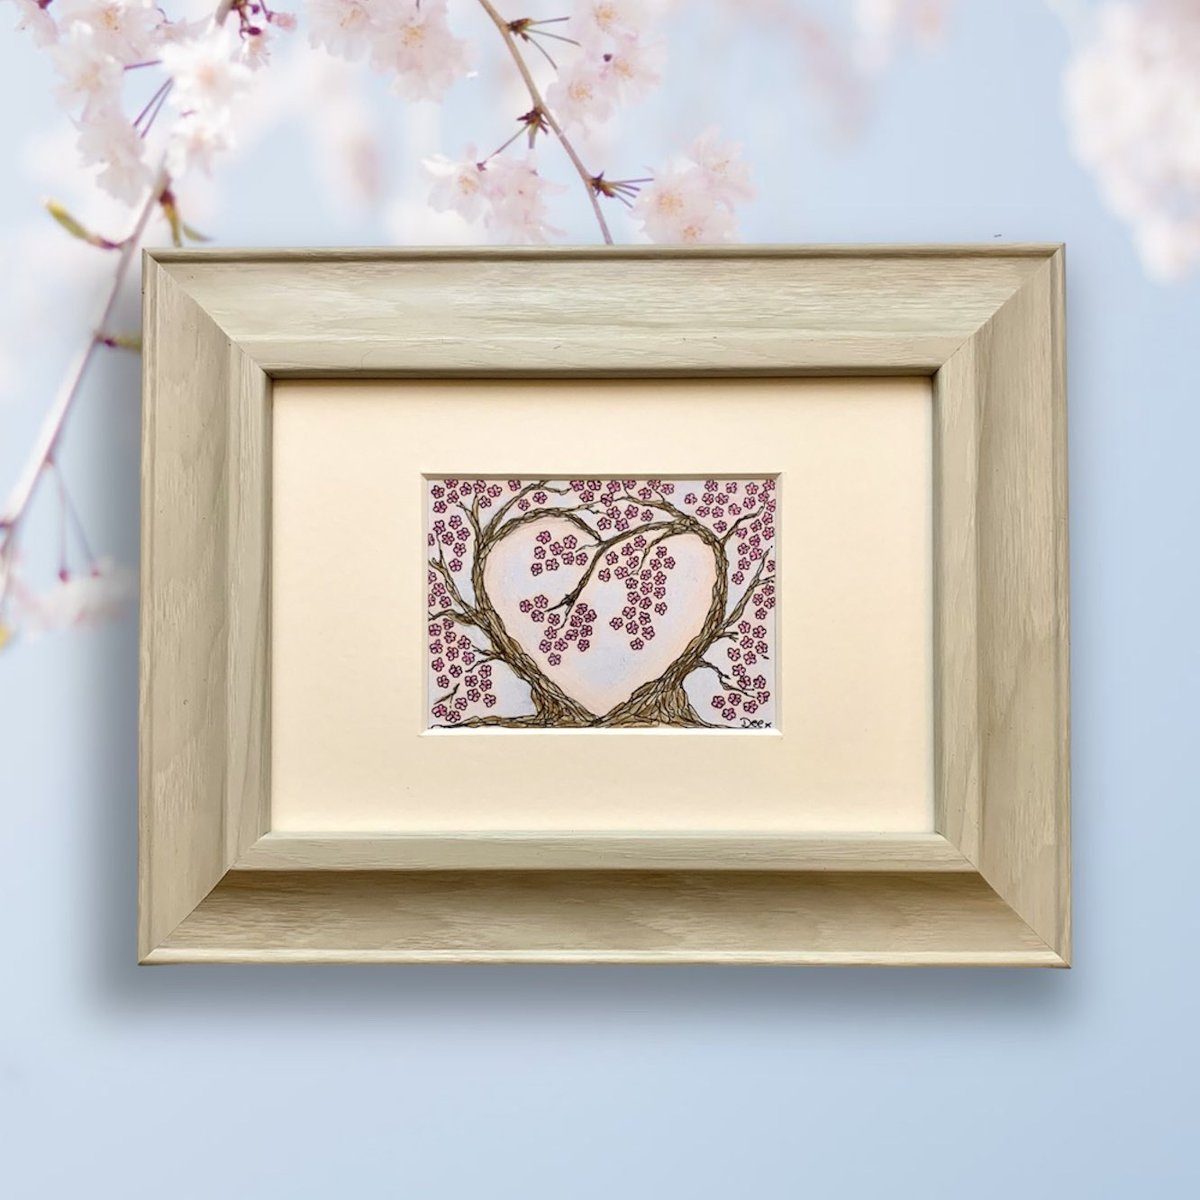 🌸 Cherry Blossom Love 🌸
Hand-drawn original miniature art - mounted and framed: deejavuart.etsy.com/listing/167493…

#shopindie #giftfinder #UKGiftHour #UKGiftAM #giftideas #EarlyBiz #UKWeekendHour #CraftBizParty #crafturday